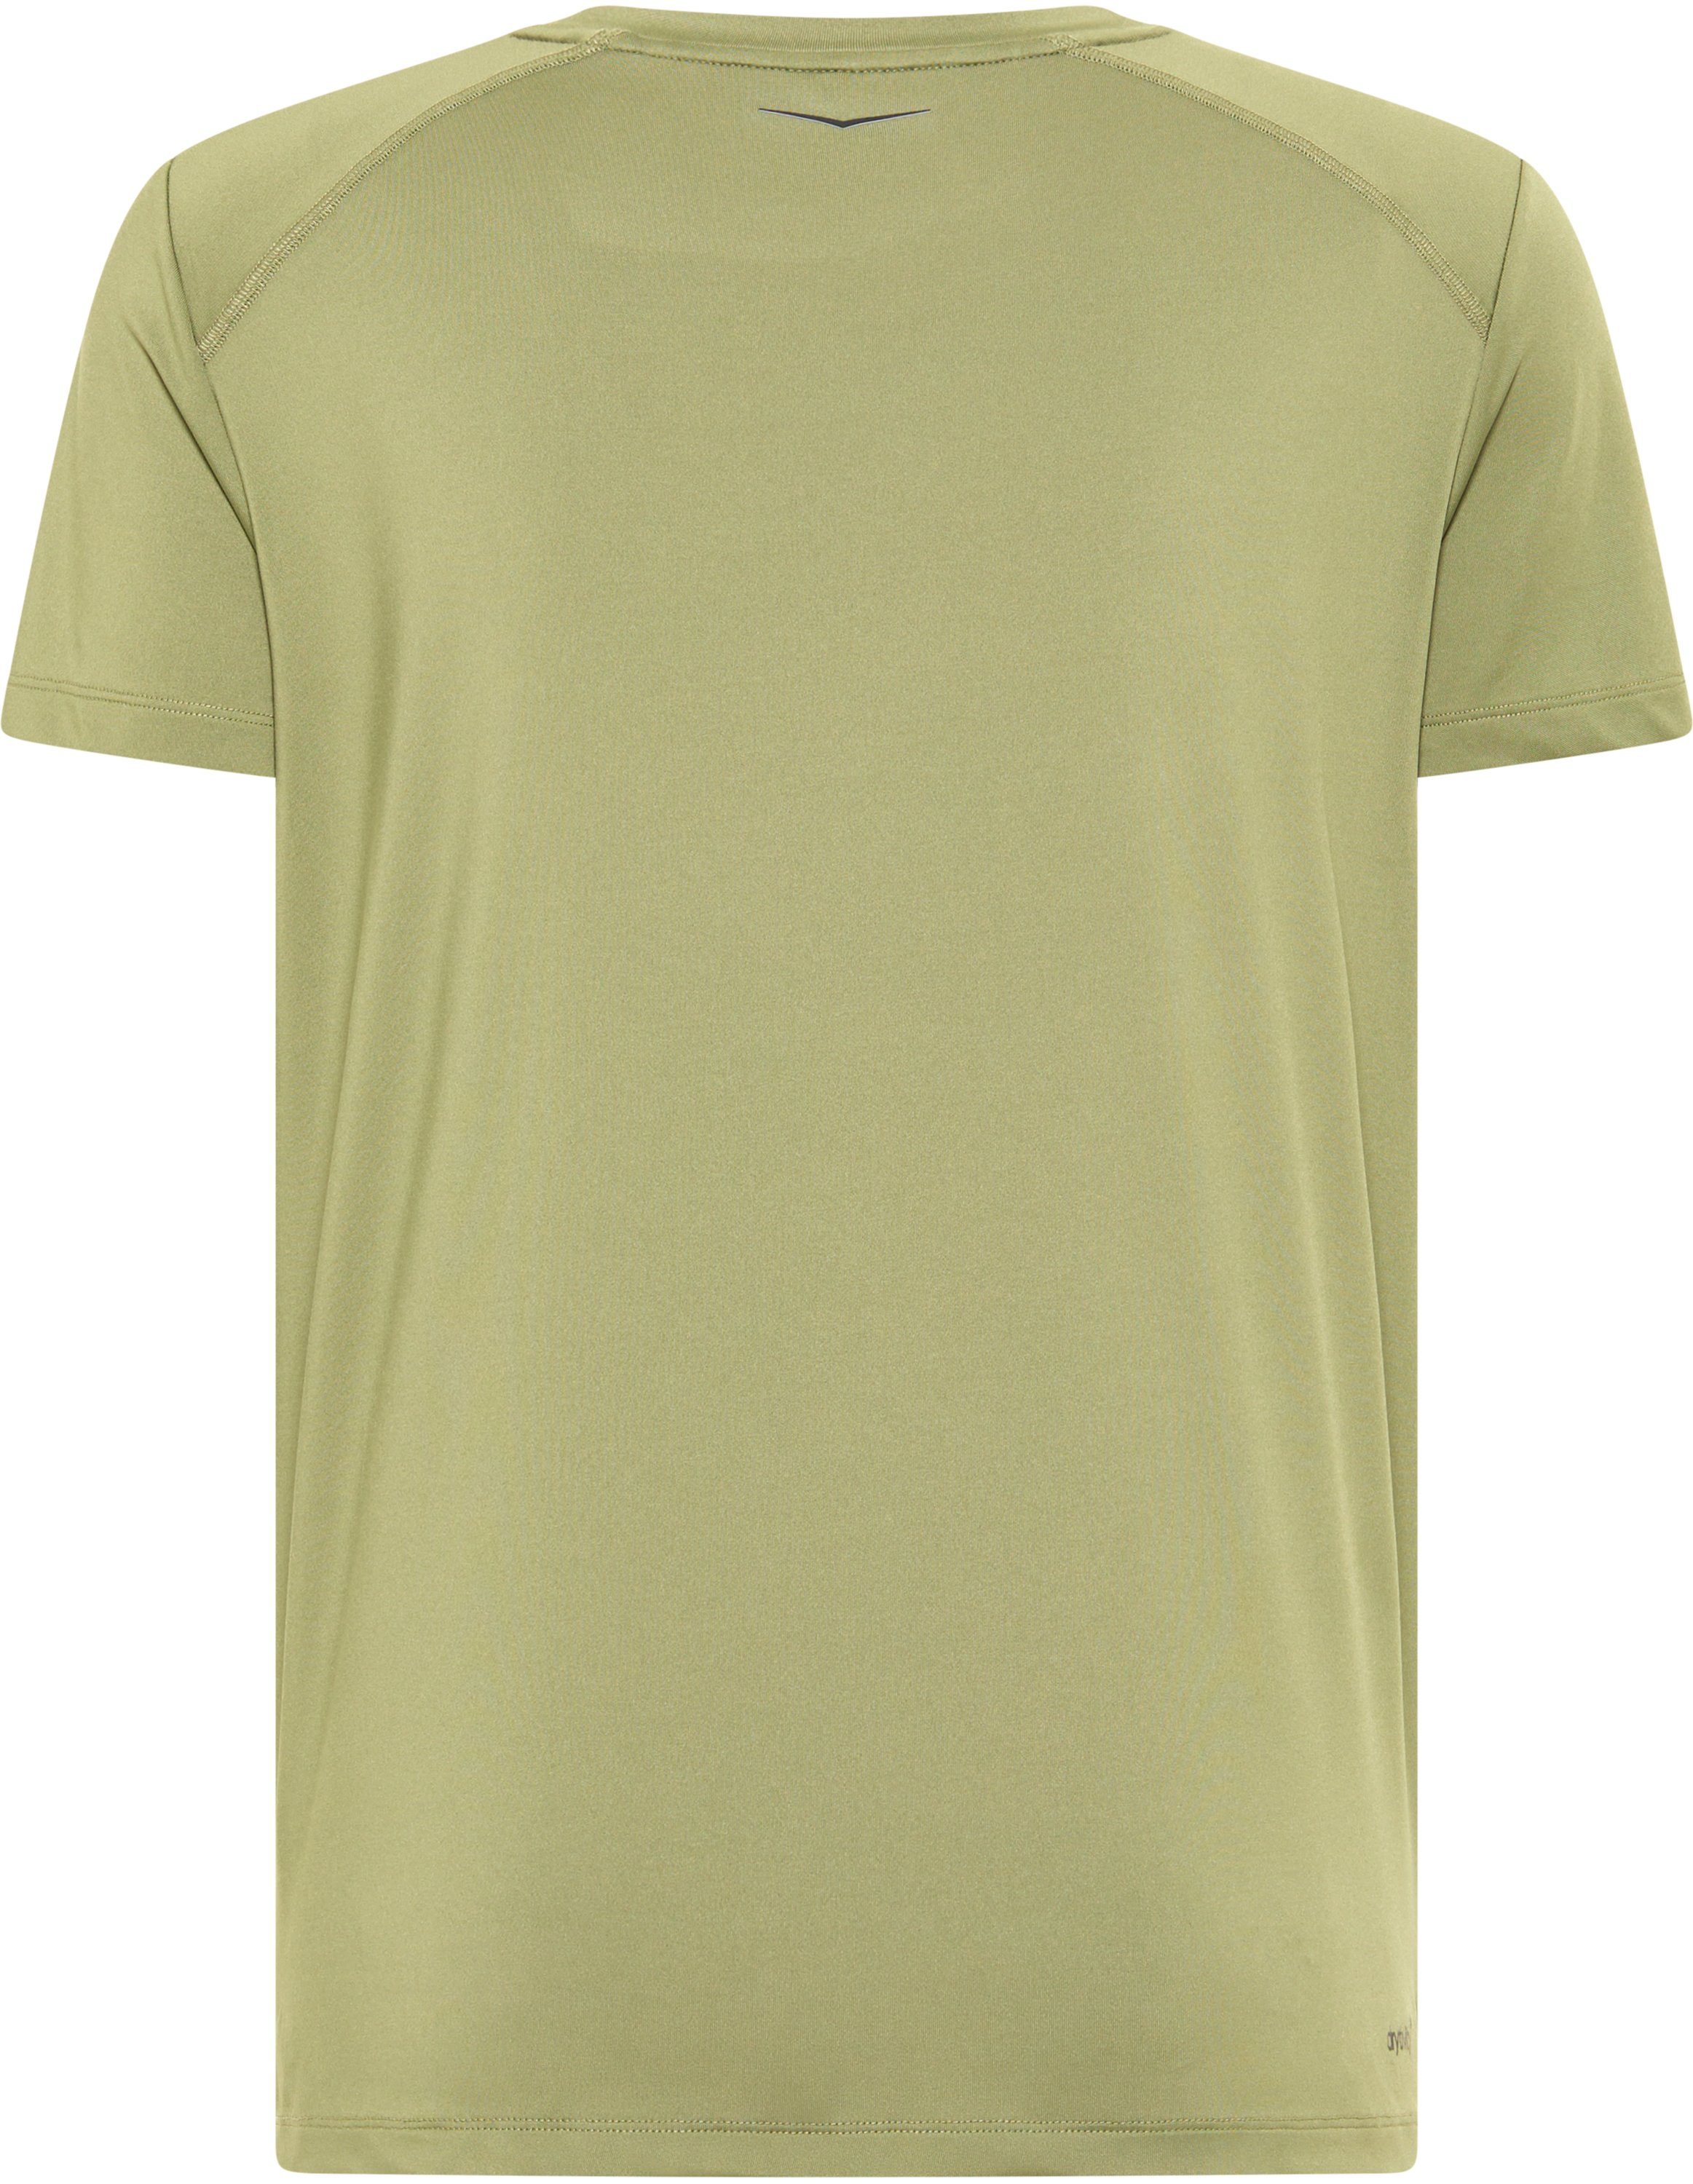 T-Shirt HAYES VB Venice Beach T-Shirt light Men olive